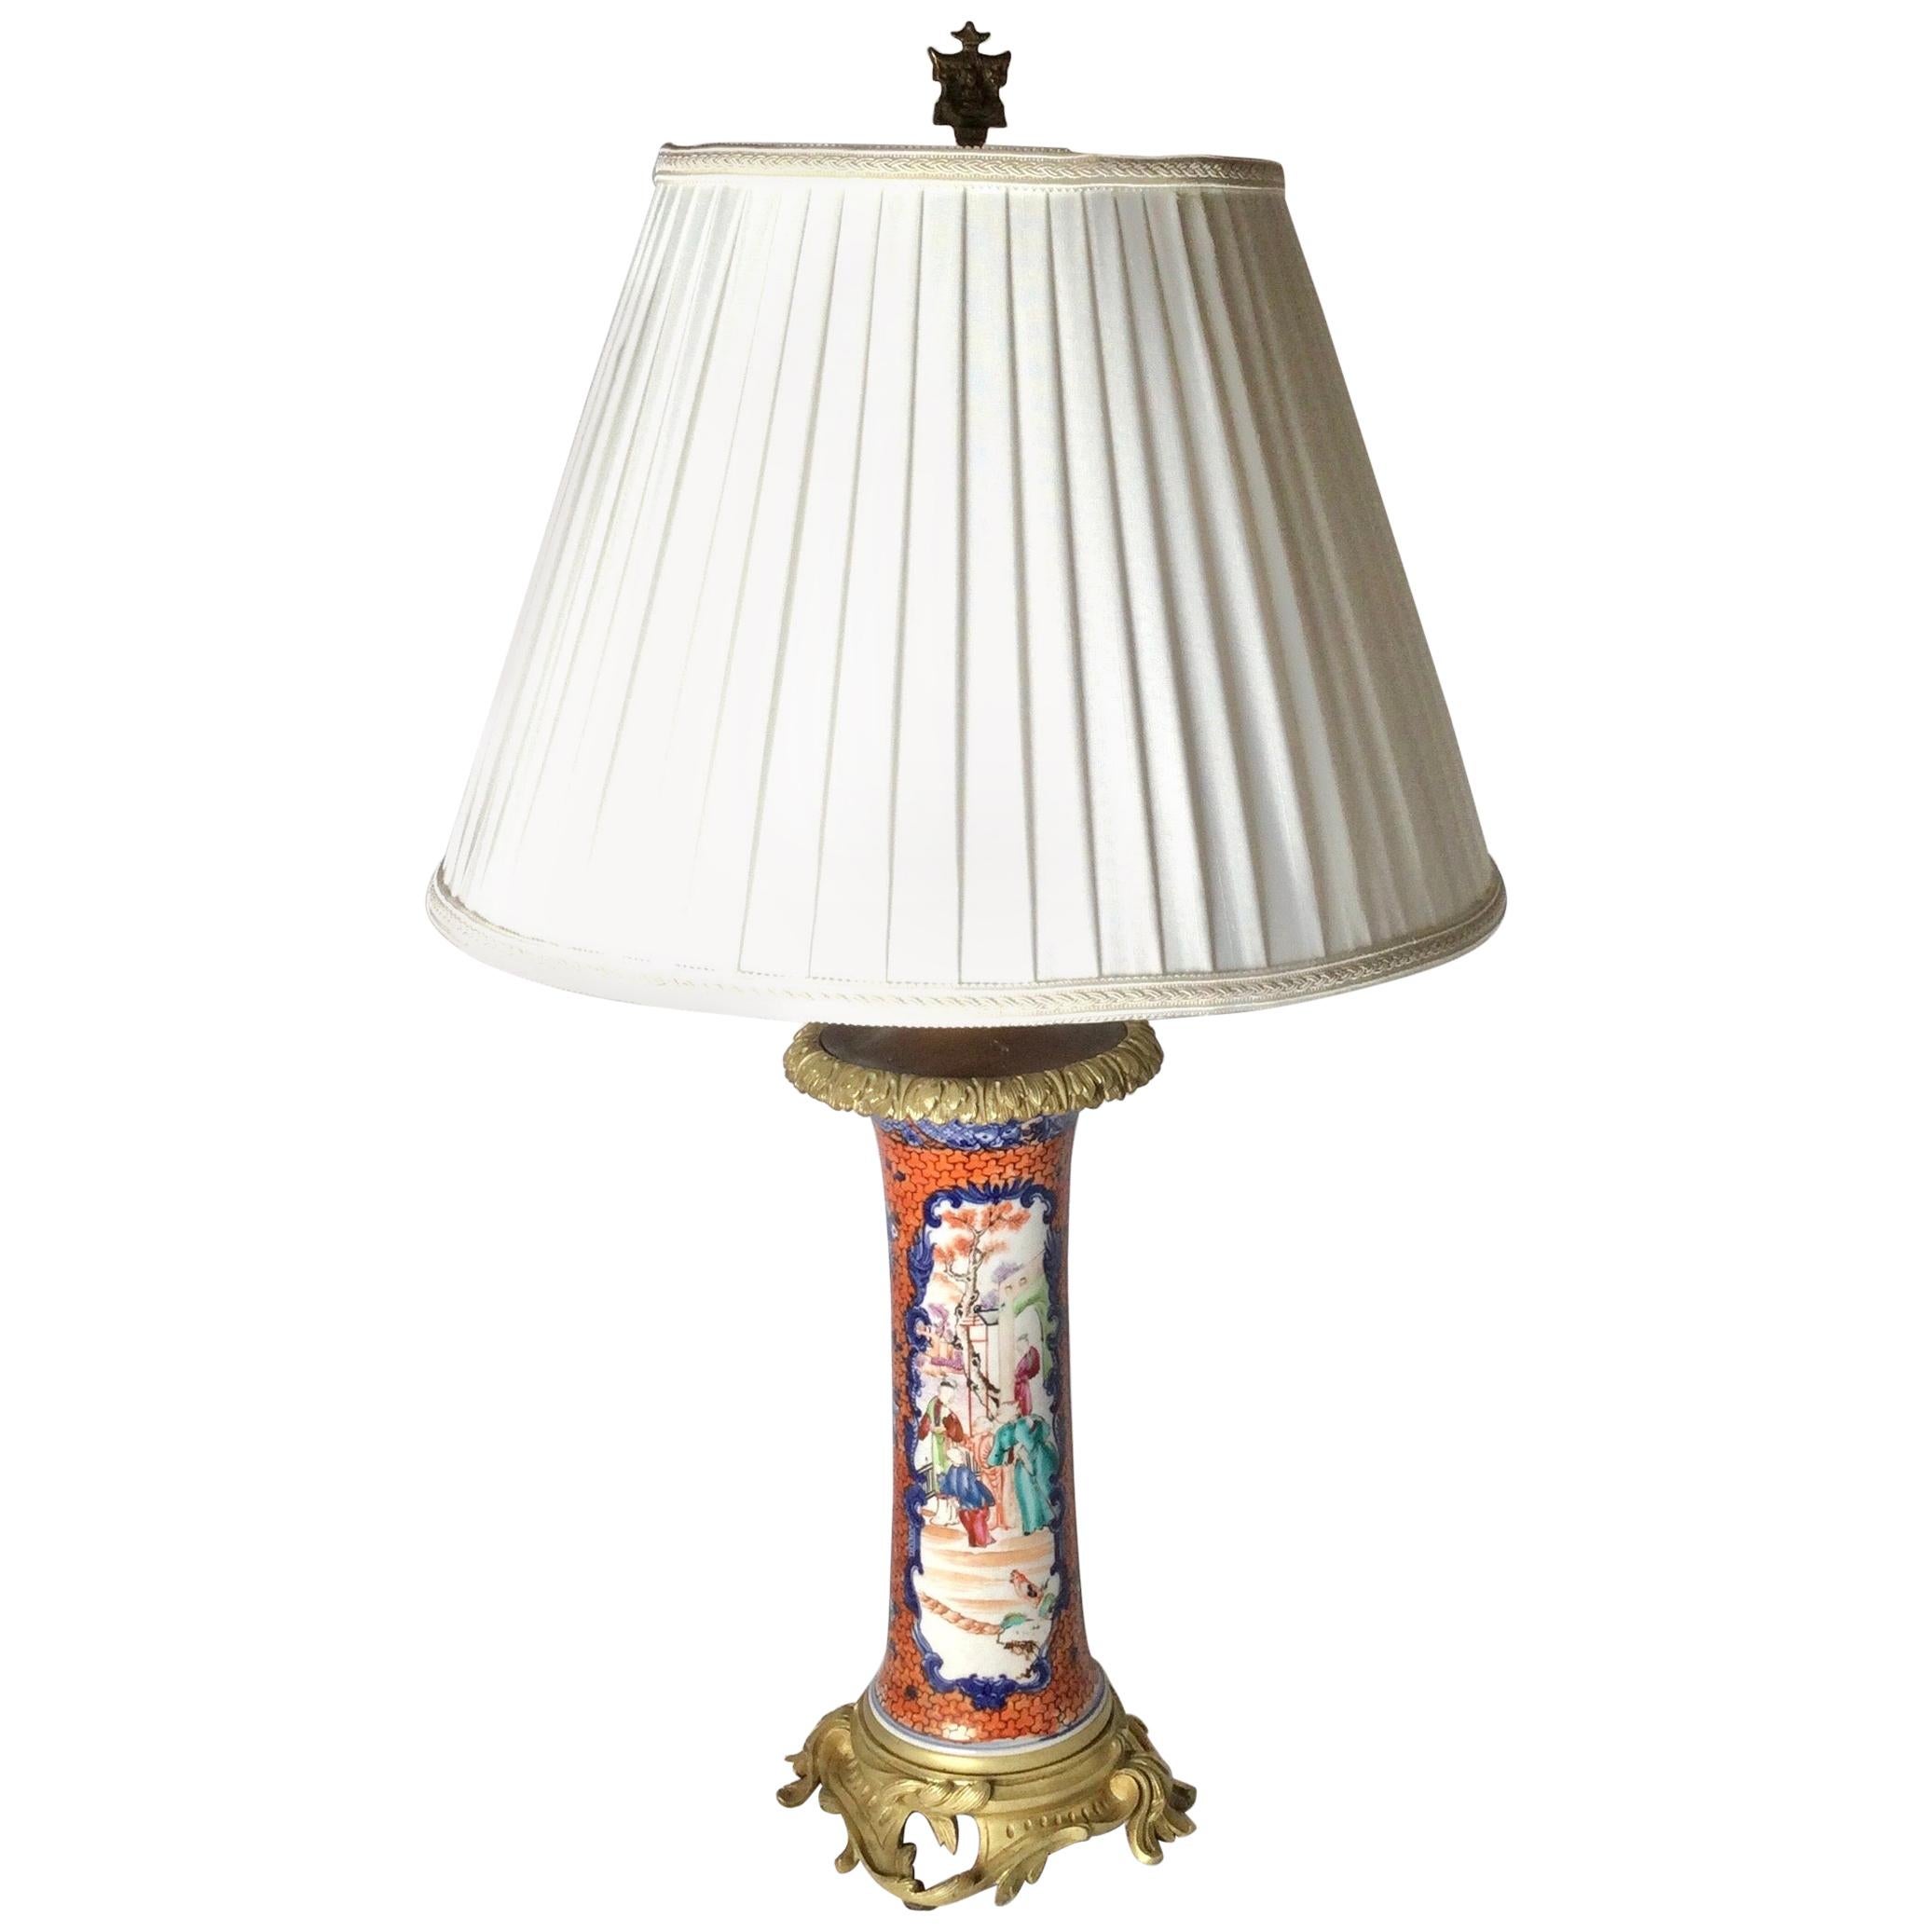 Chinese Export Porcelain Ormolu Mounted Lamp